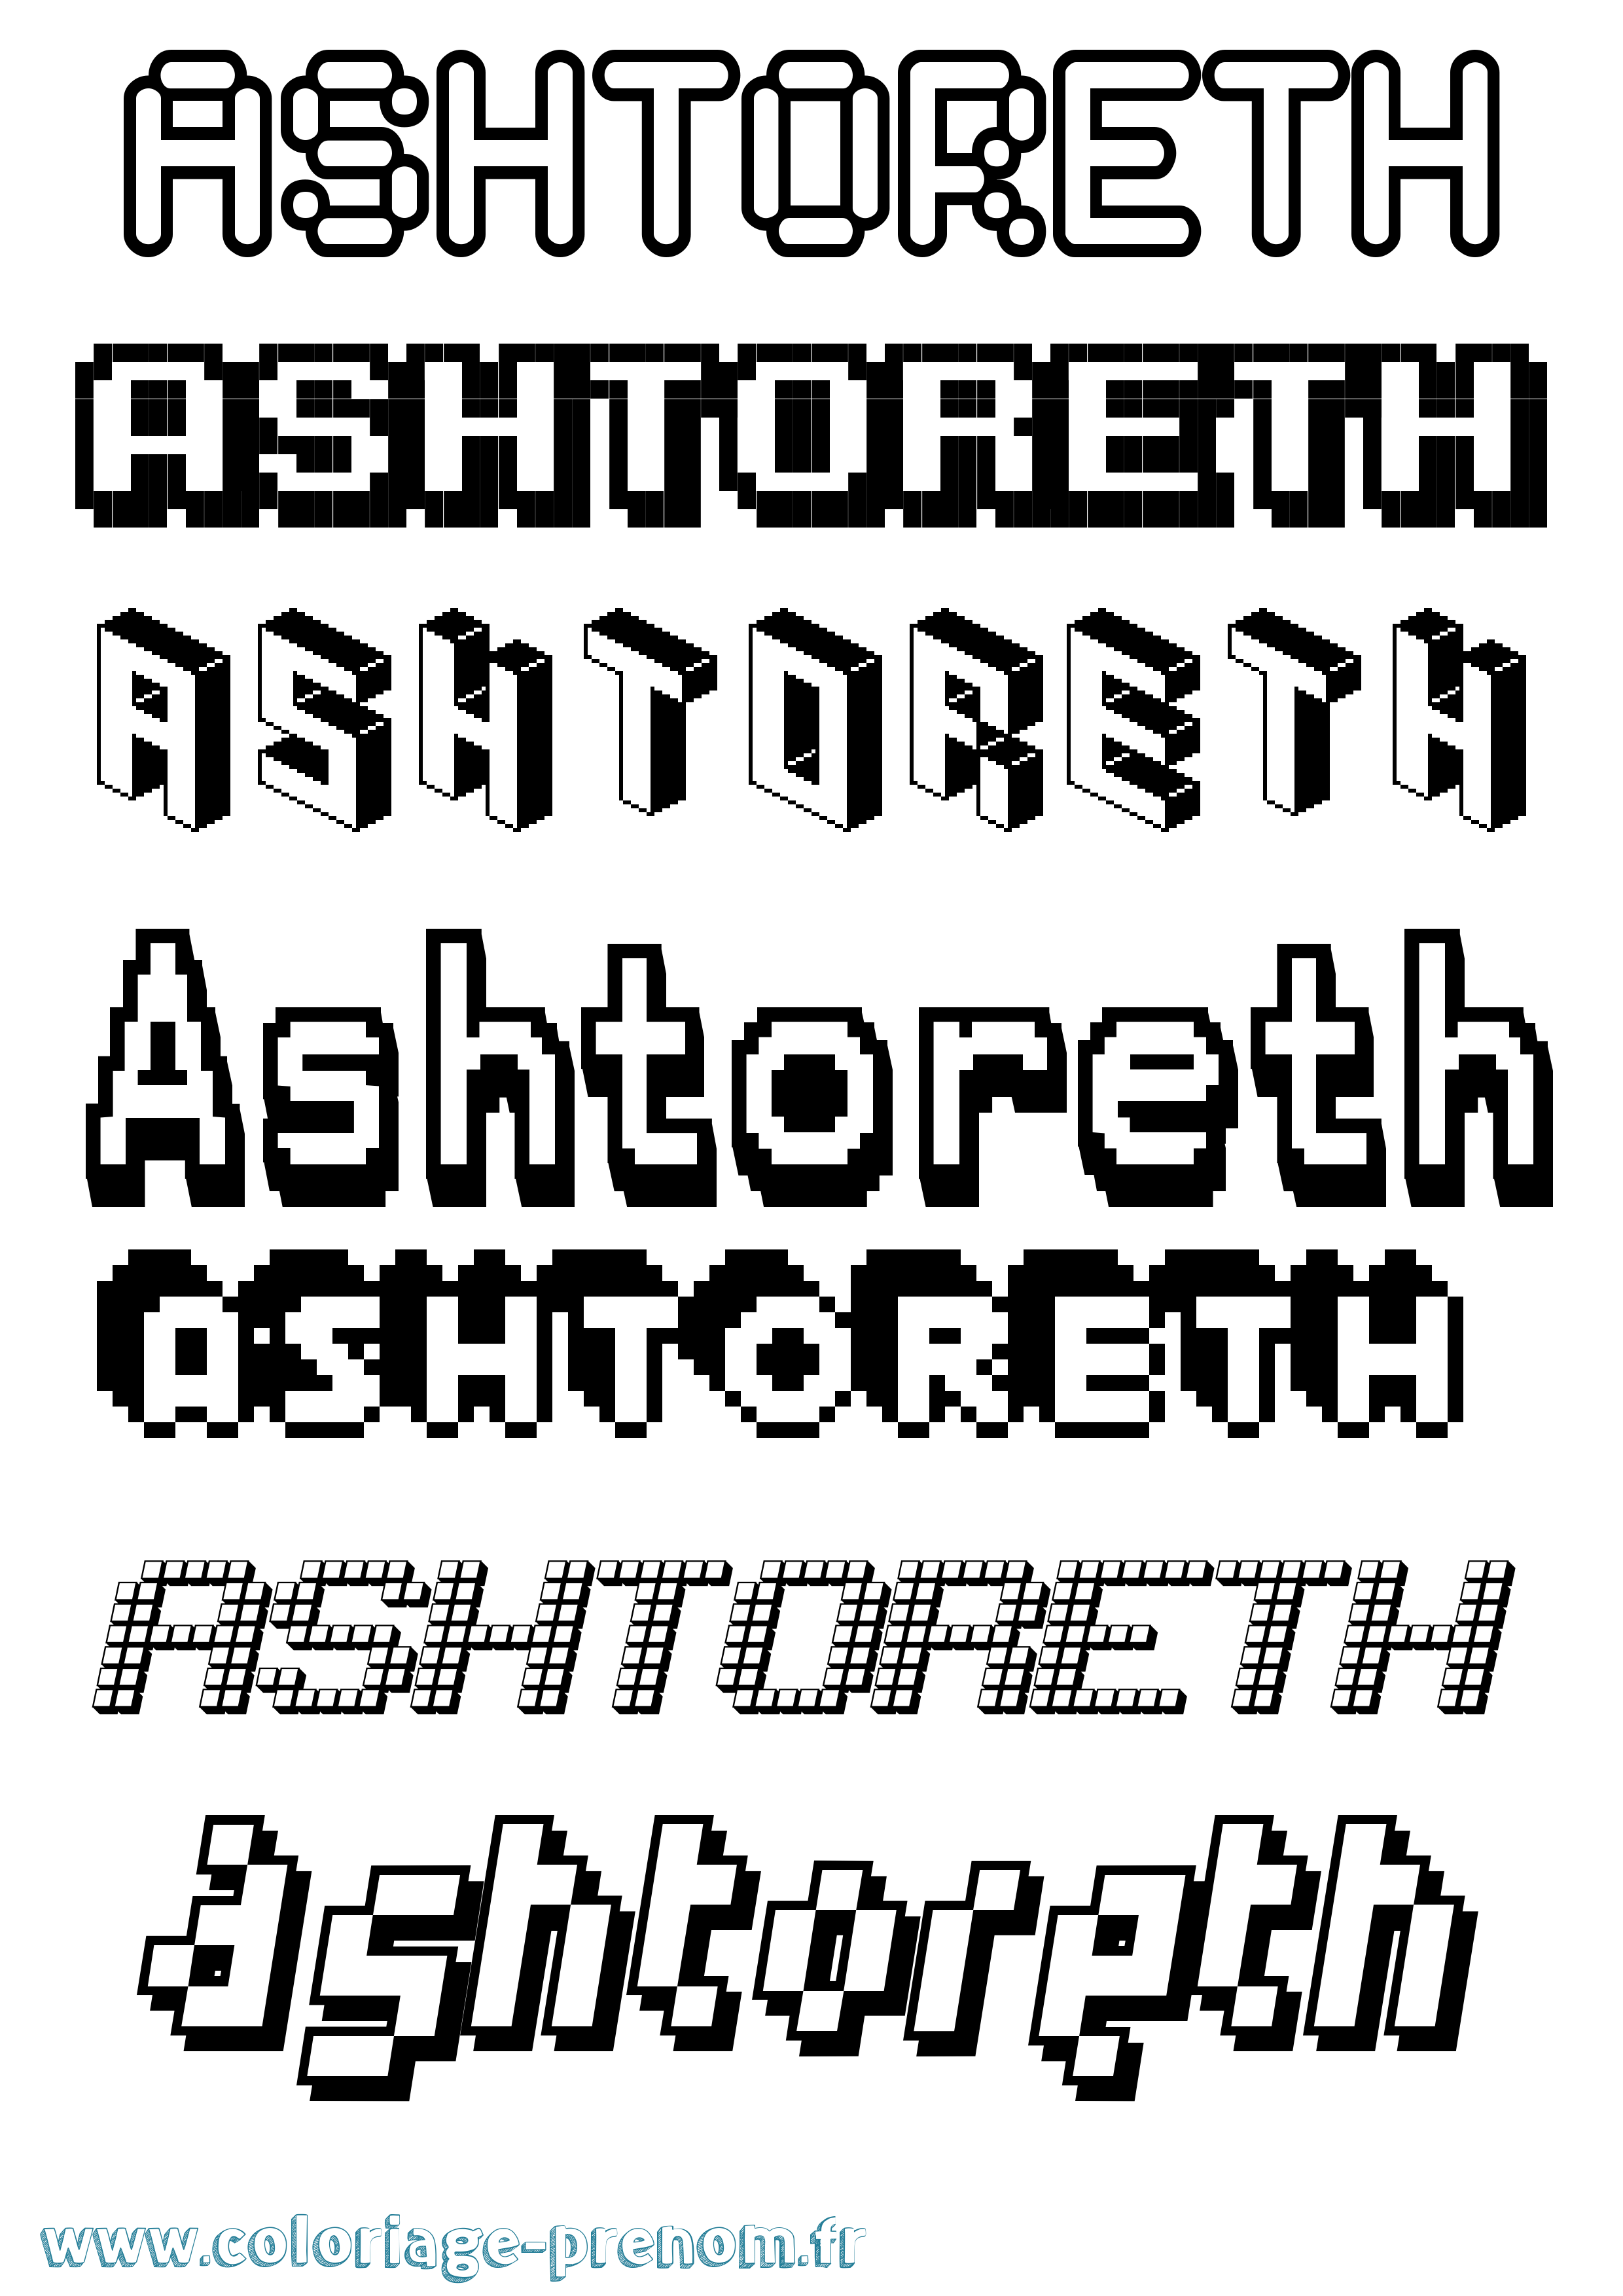 Coloriage prénom Ashtoreth Pixel